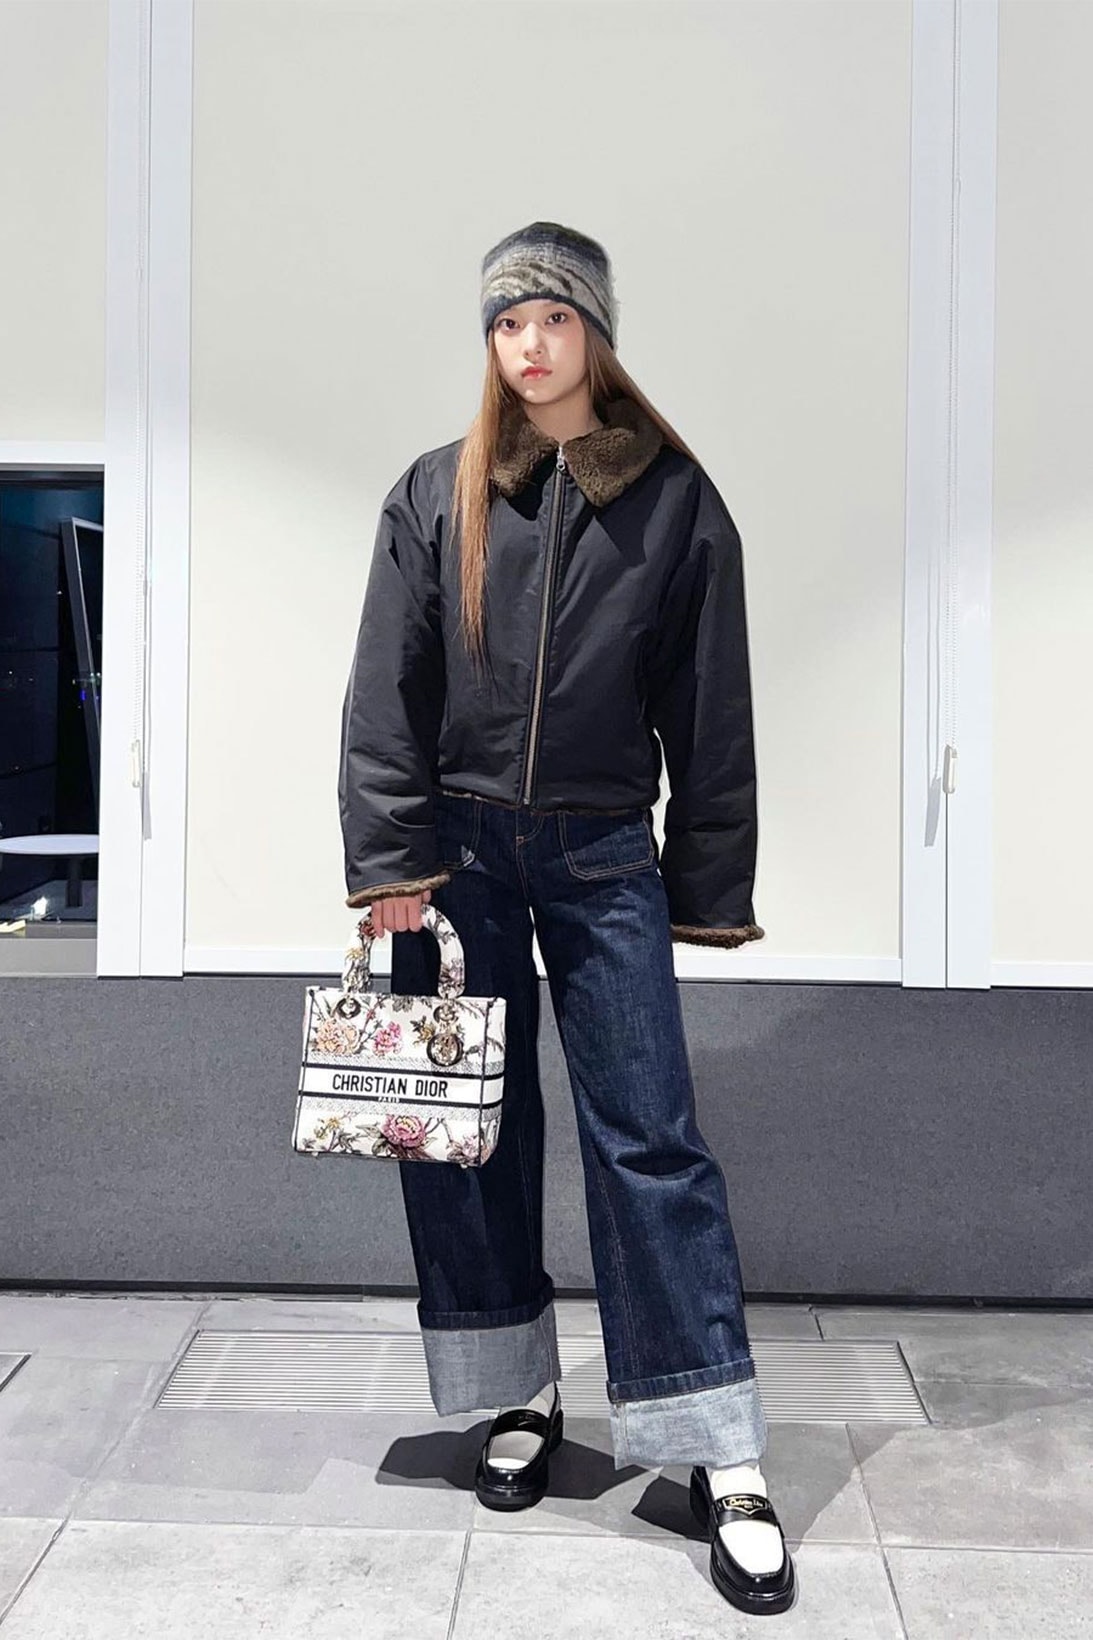 NewJeans' Haerin Named Dior Brand Ambassador